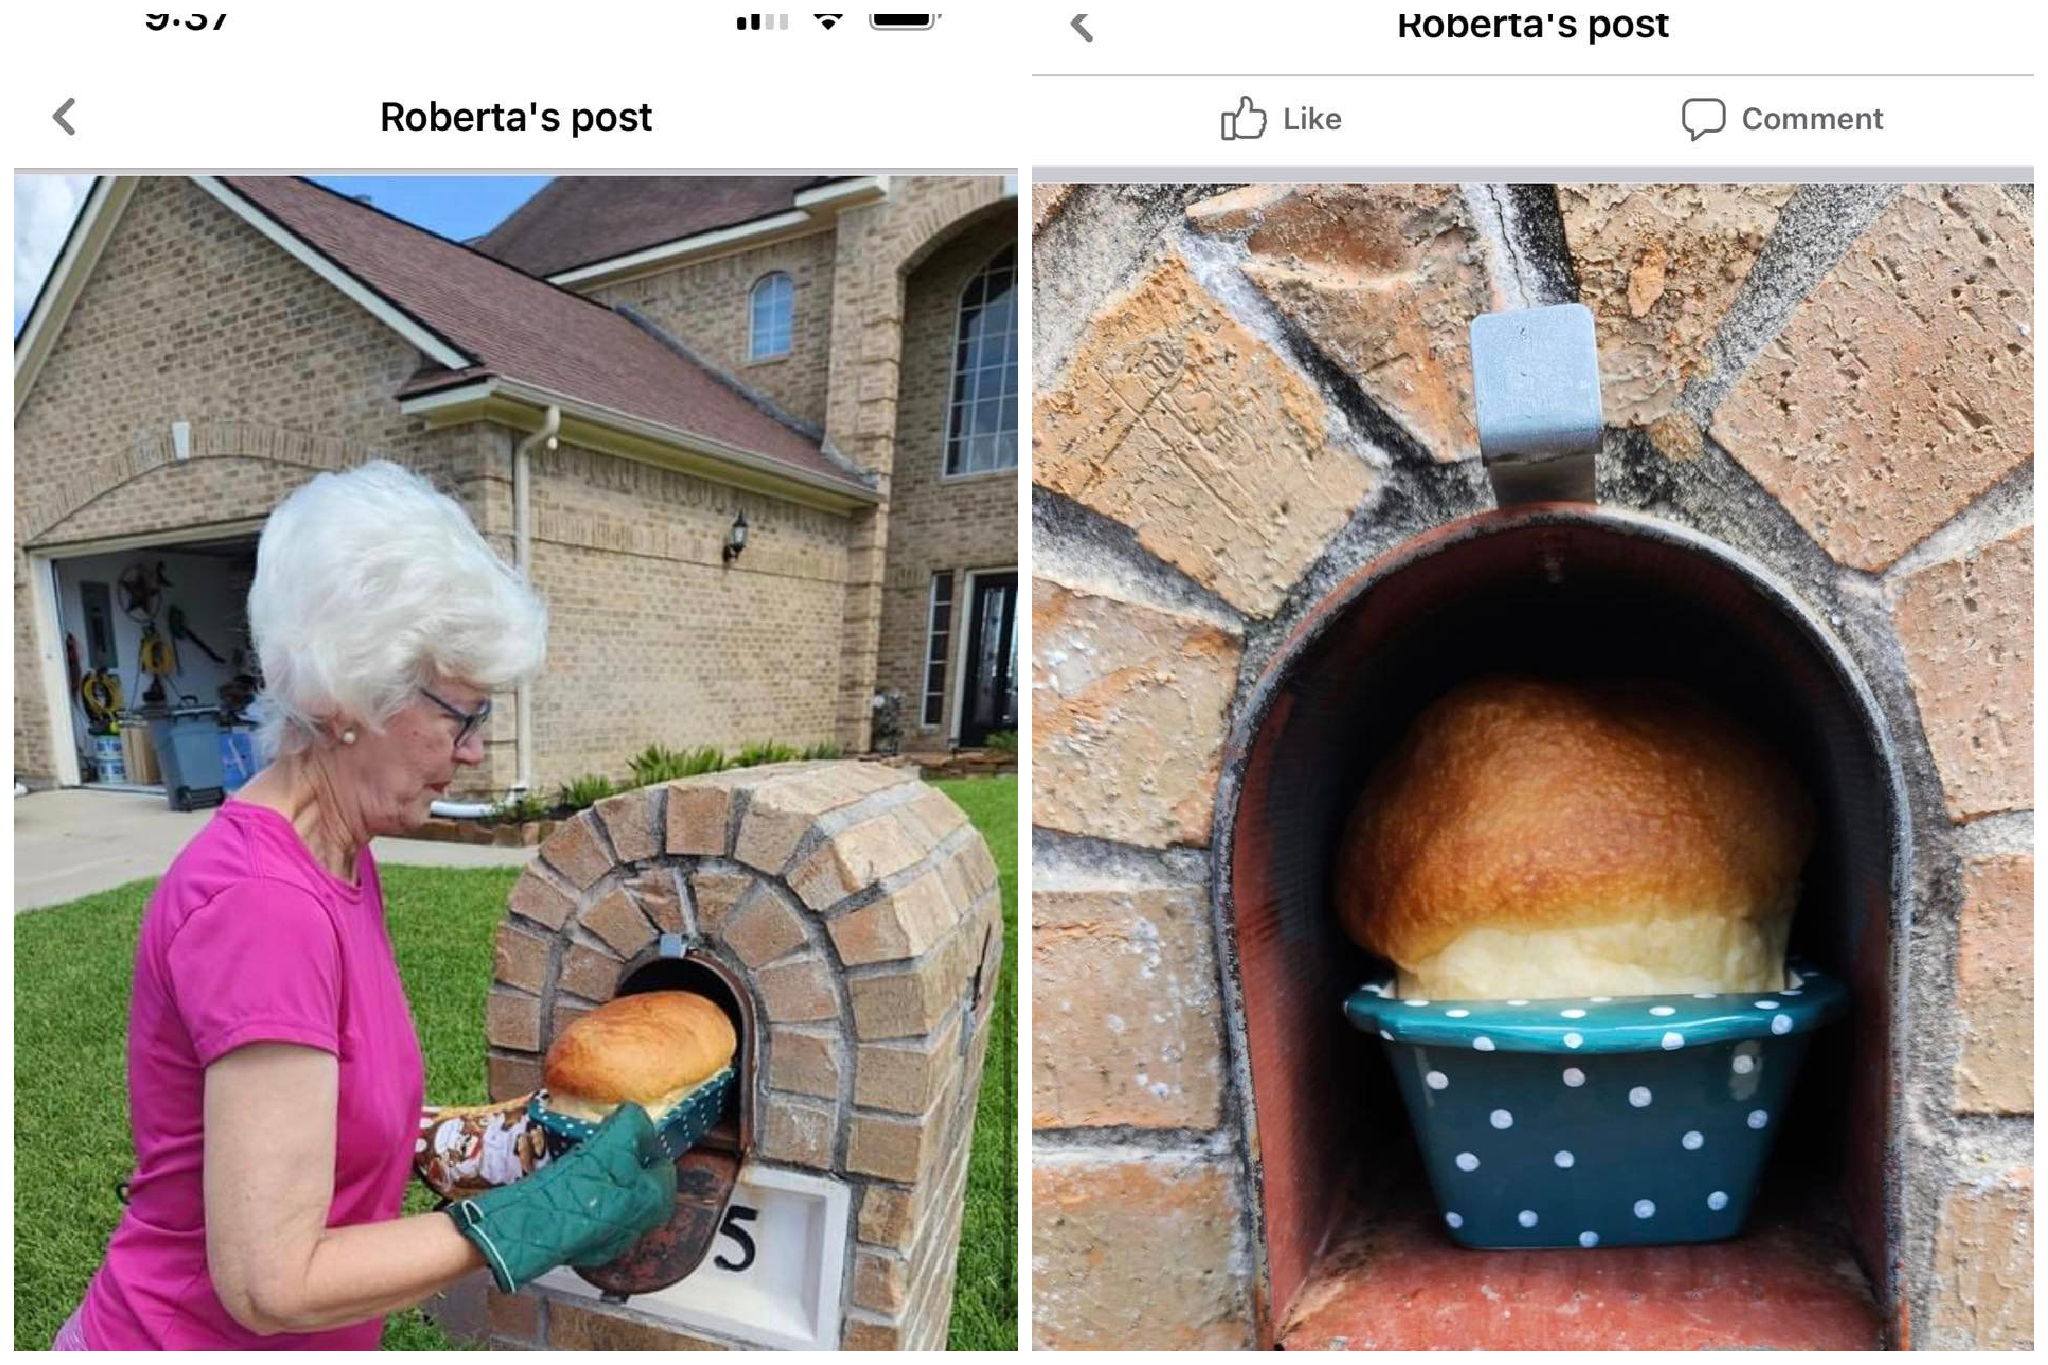 Photo of Houston woman baking bread in mailbox is half-true